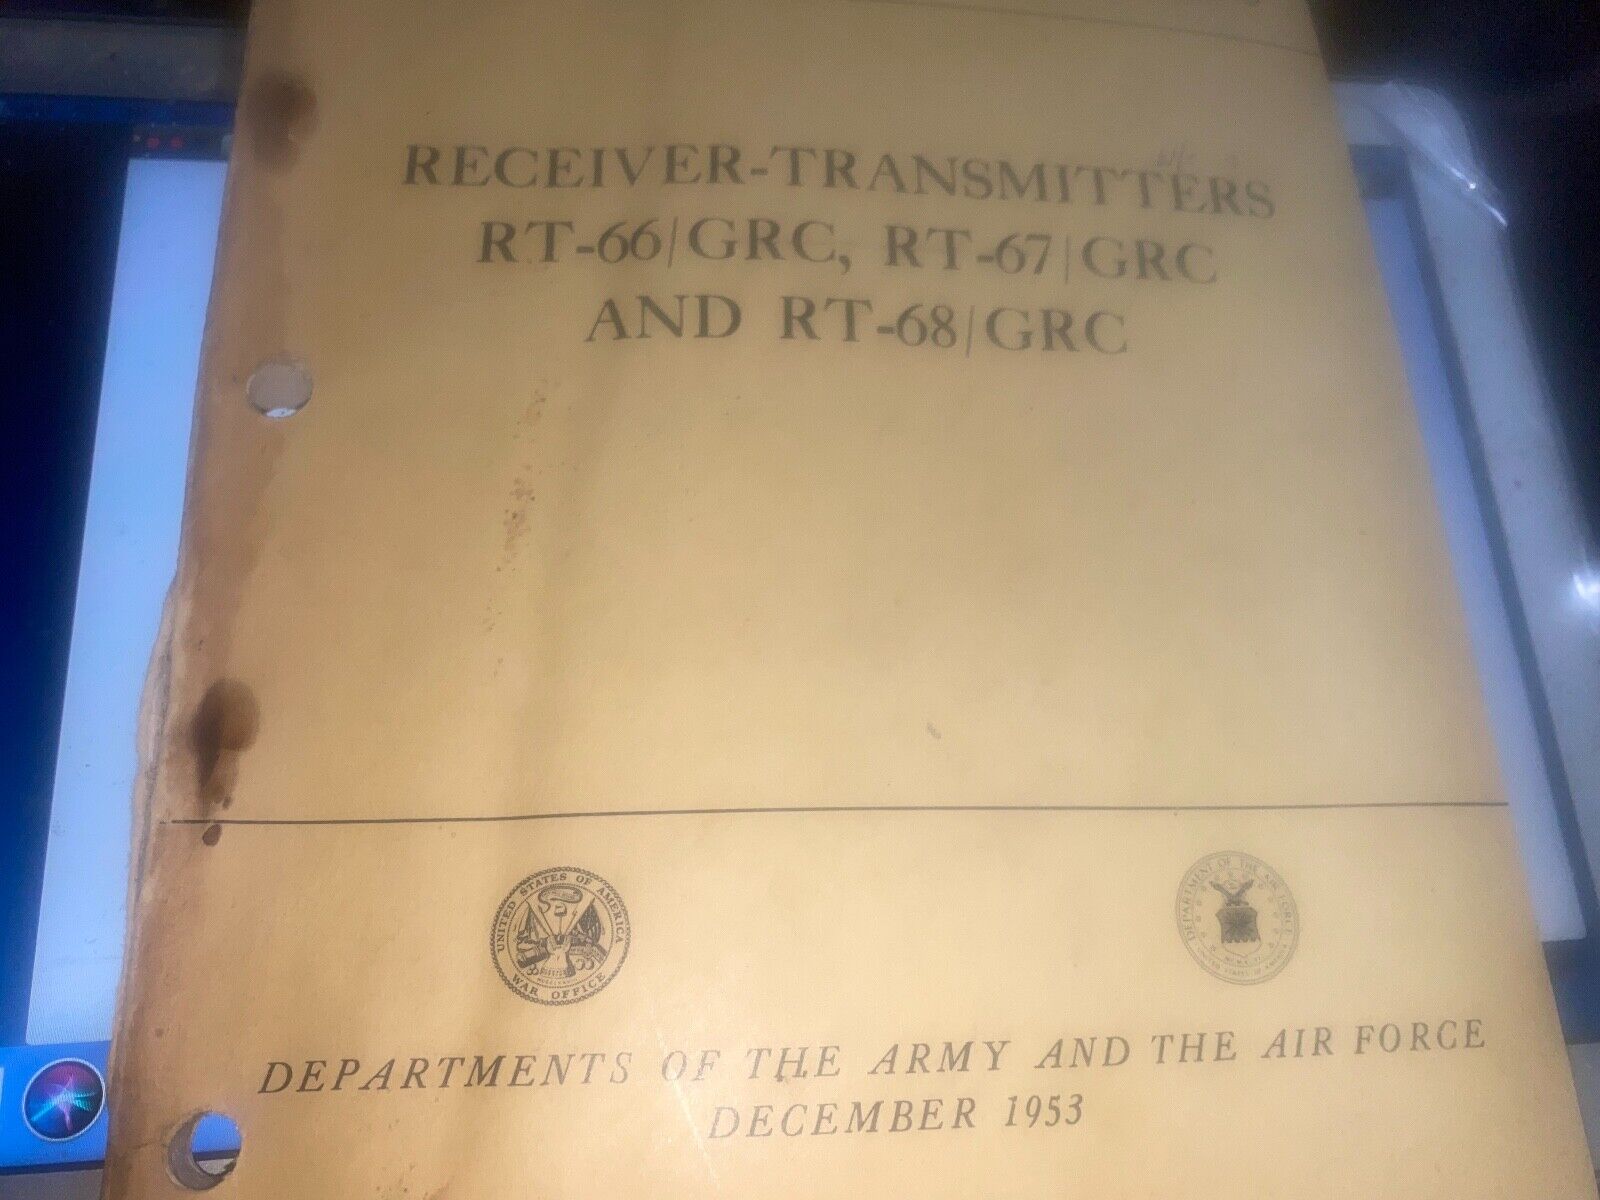 1953 Original Army RT-66/GRC 67/GRC 68/GRC Receiver Transmitter Manual TM11-289